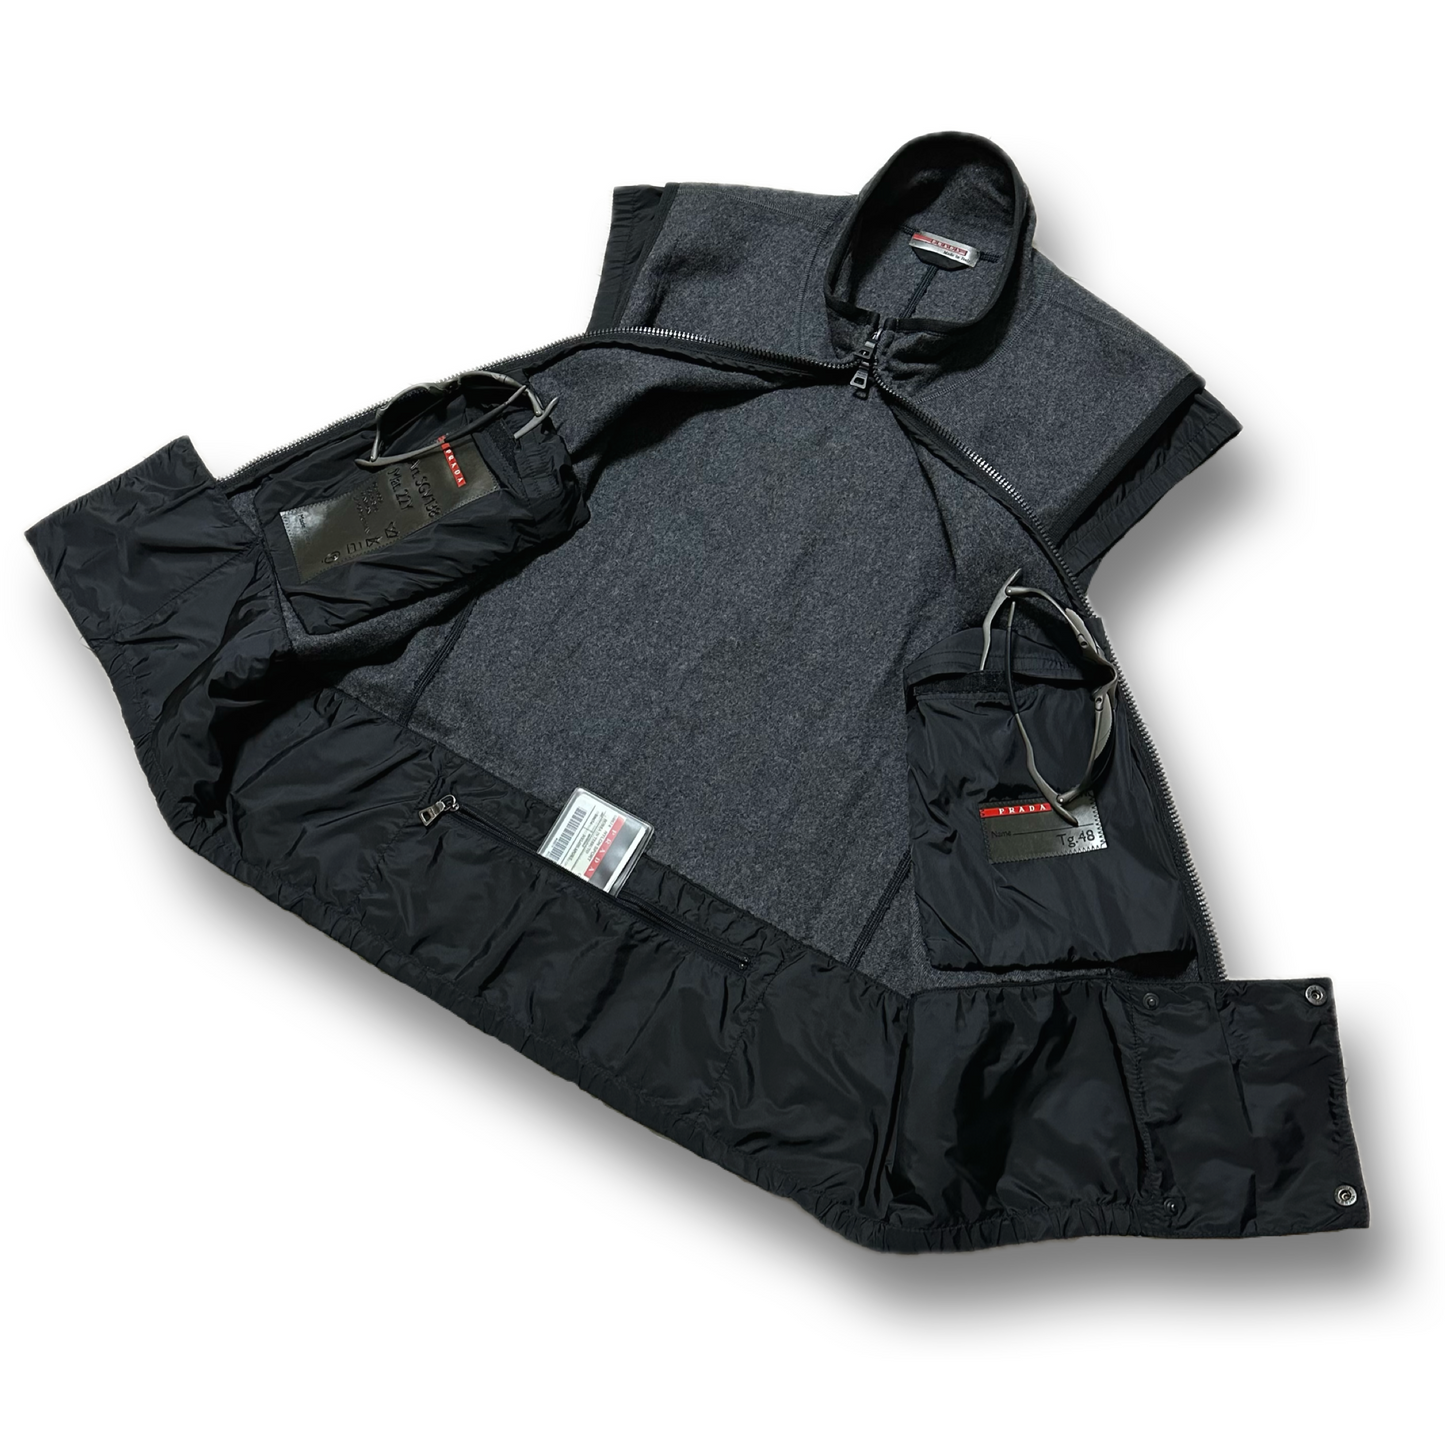 PRADASPORT Technical Wool Vest